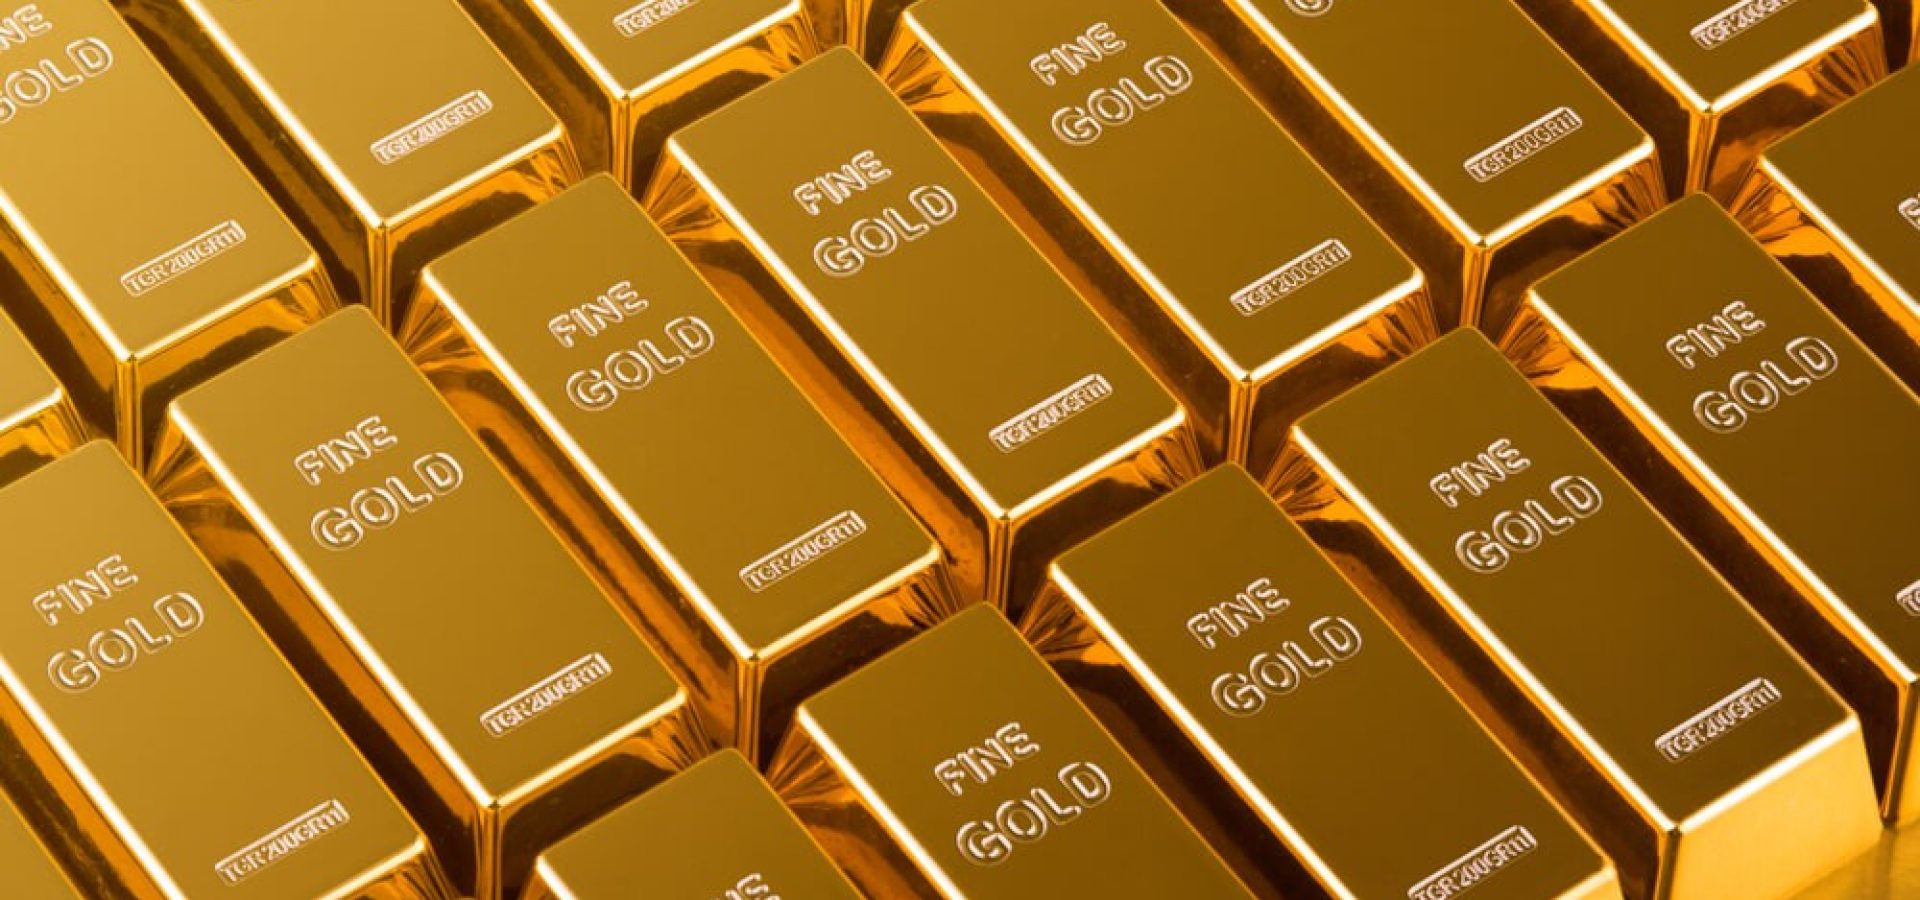 An array of gold bars